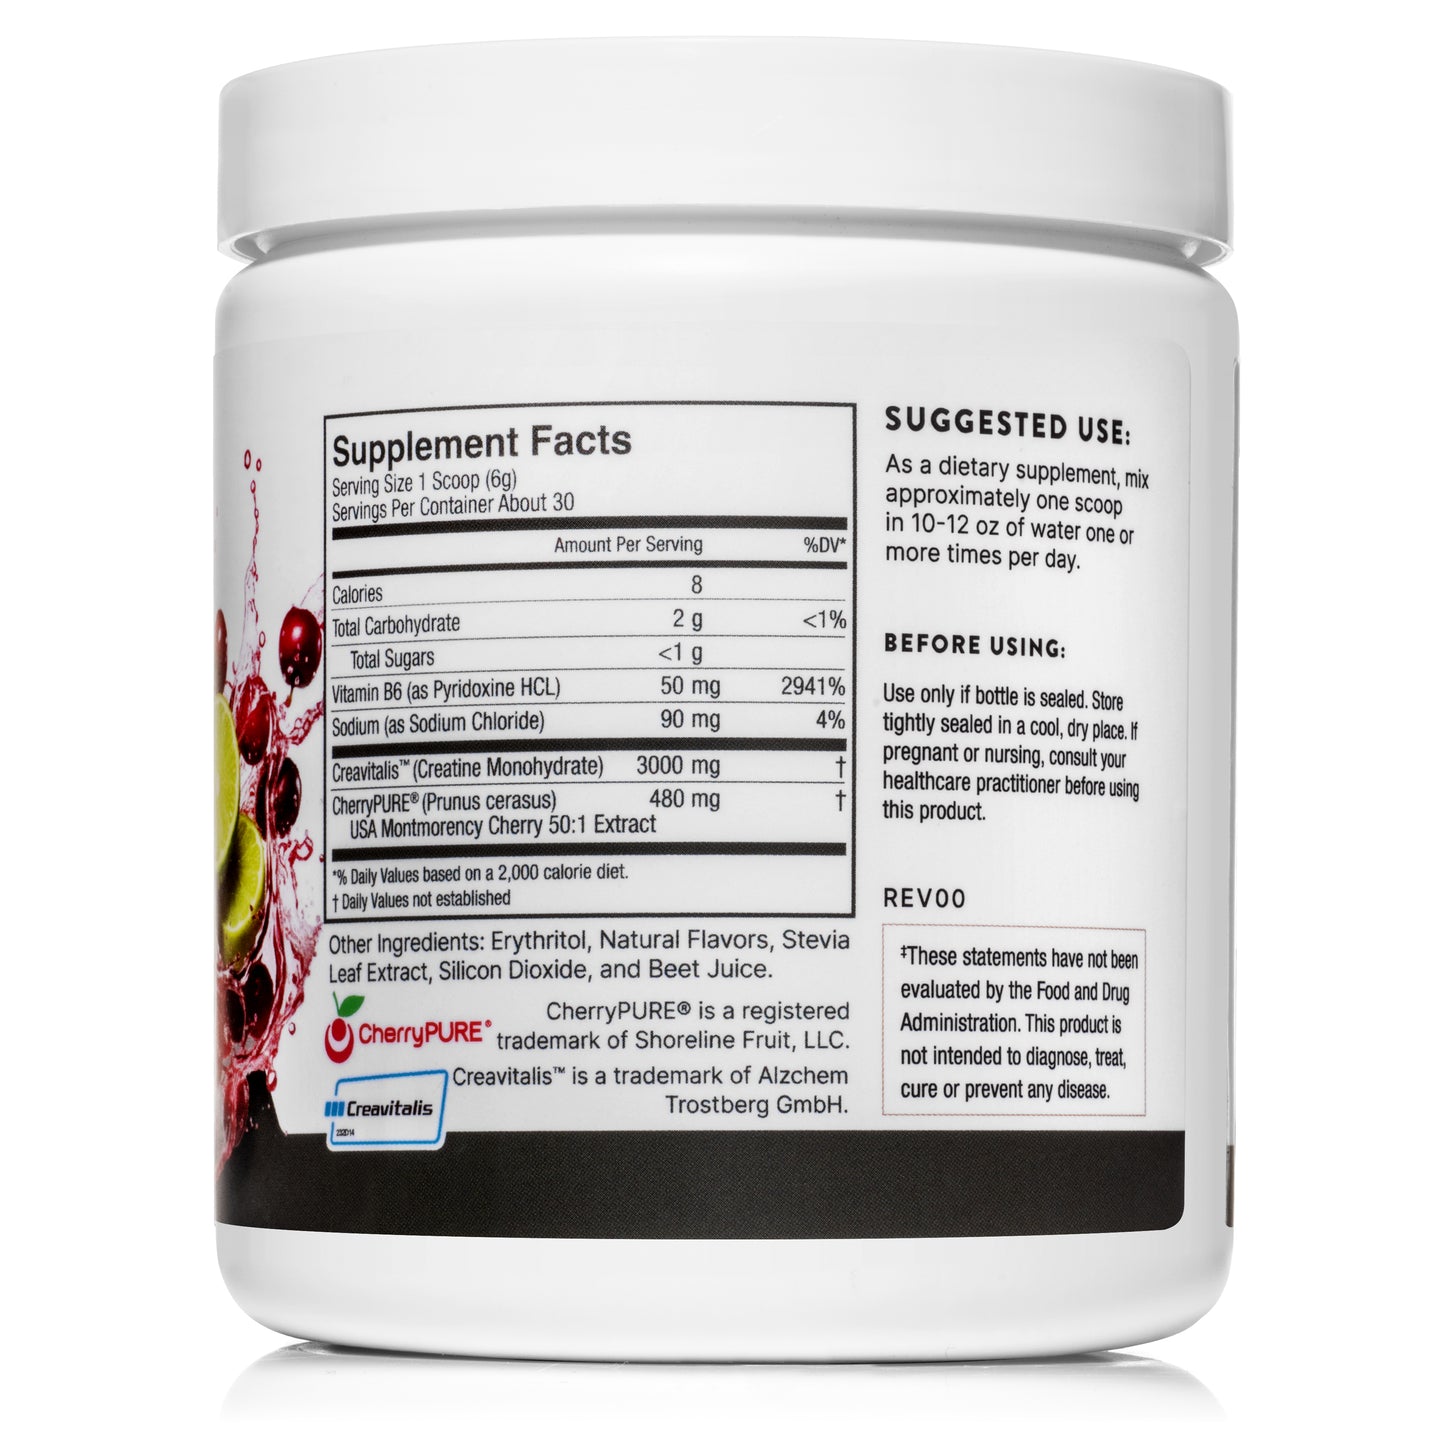 CreaLife - Strong Body, Healthy Brain - German Micronized Creatine + USA CherryPURE Tart Cherry Extract + Vitamin B6